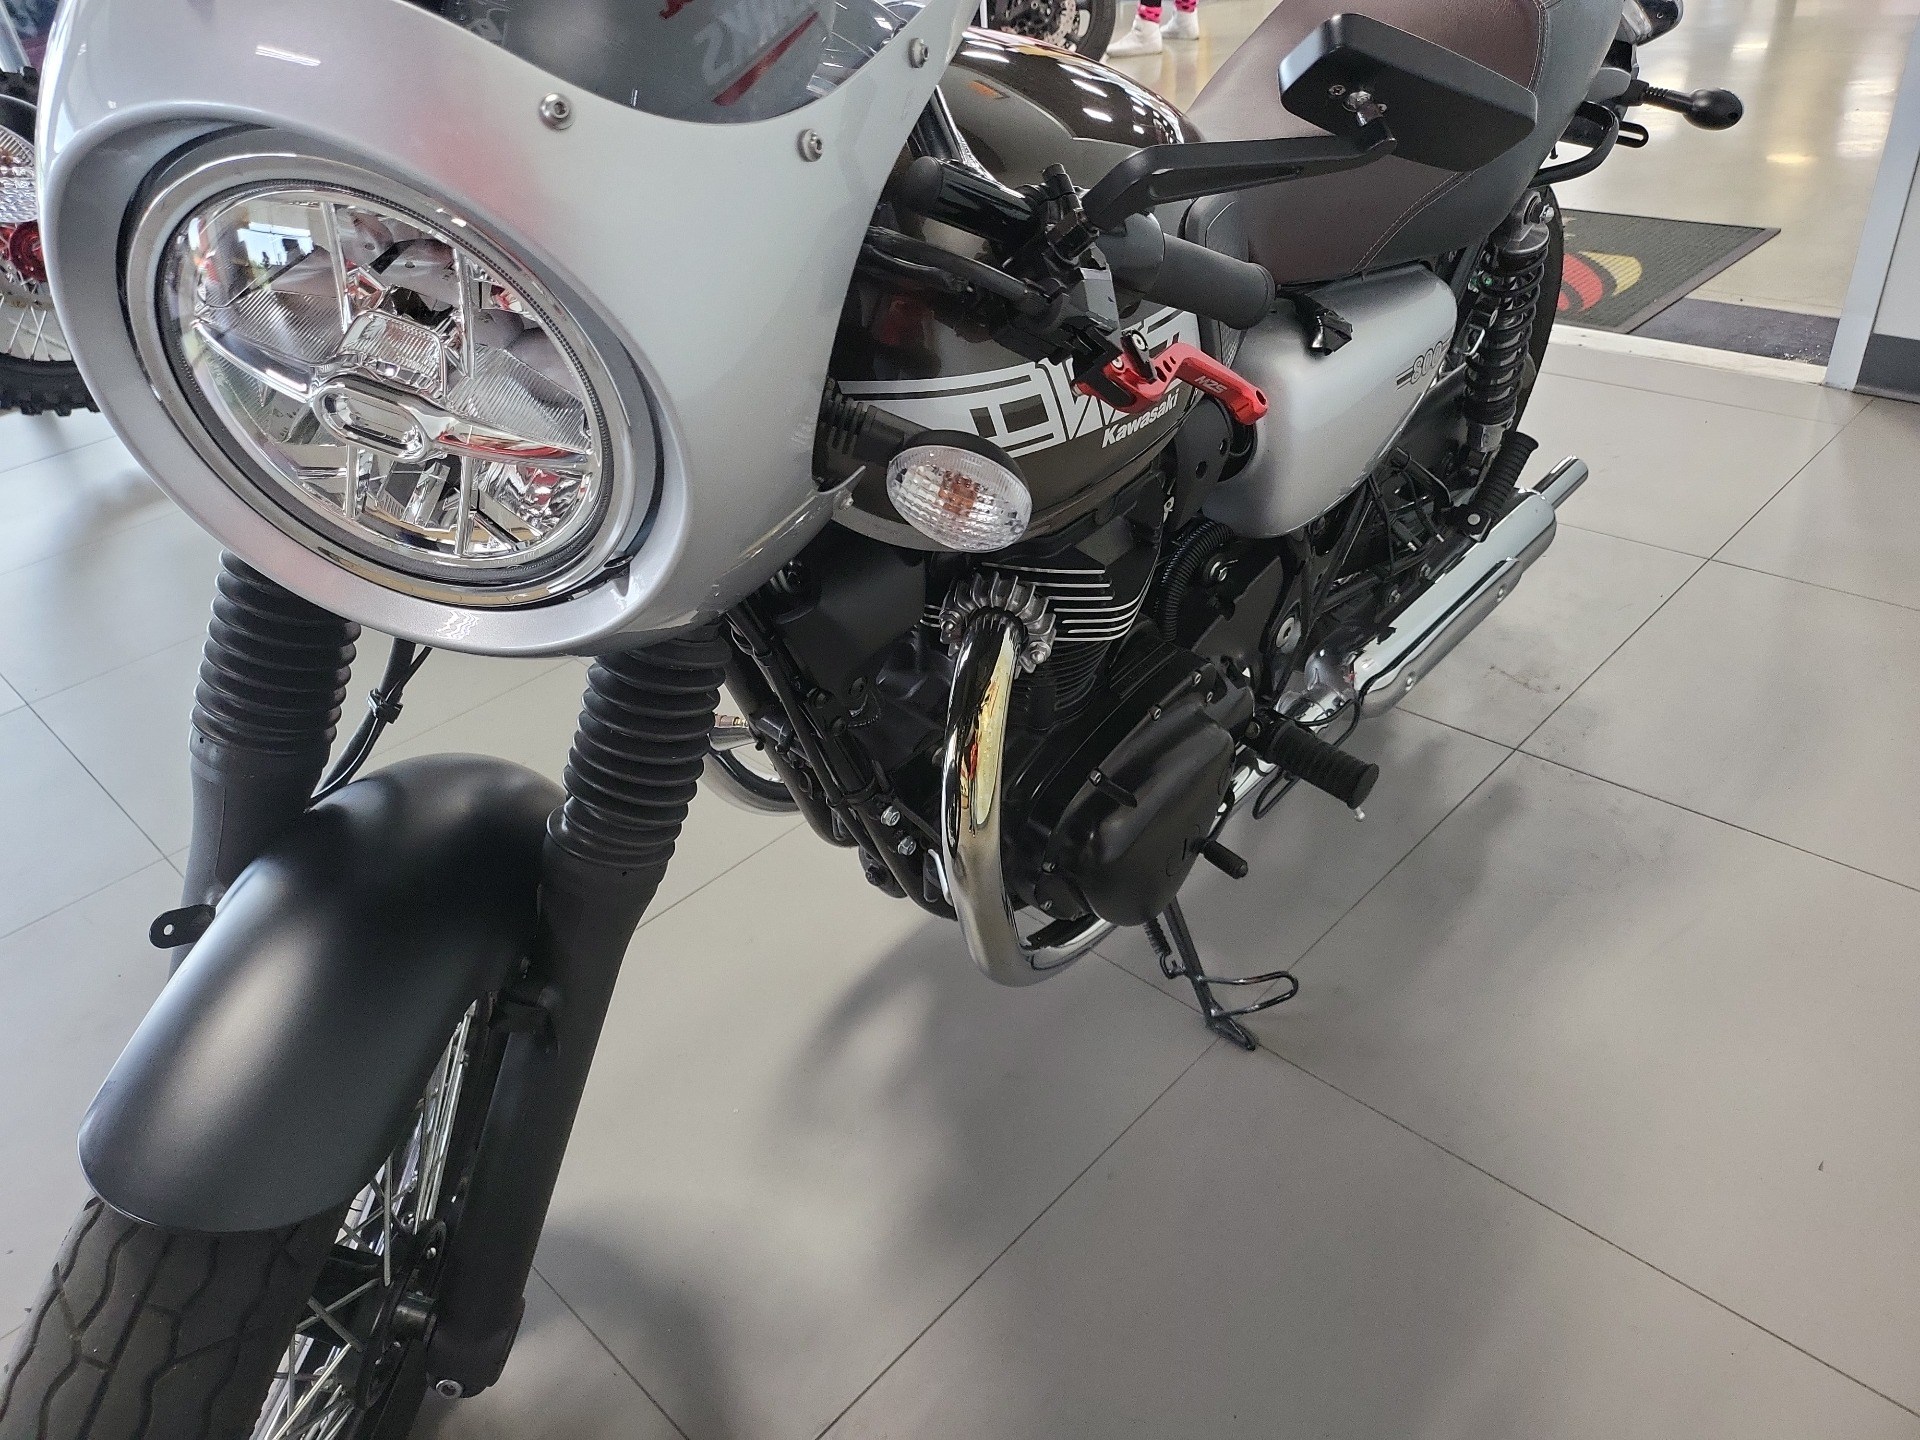 Used 2019 Kawasaki W800 Cafe Motorcycles in Springfield, MO | Stock ...